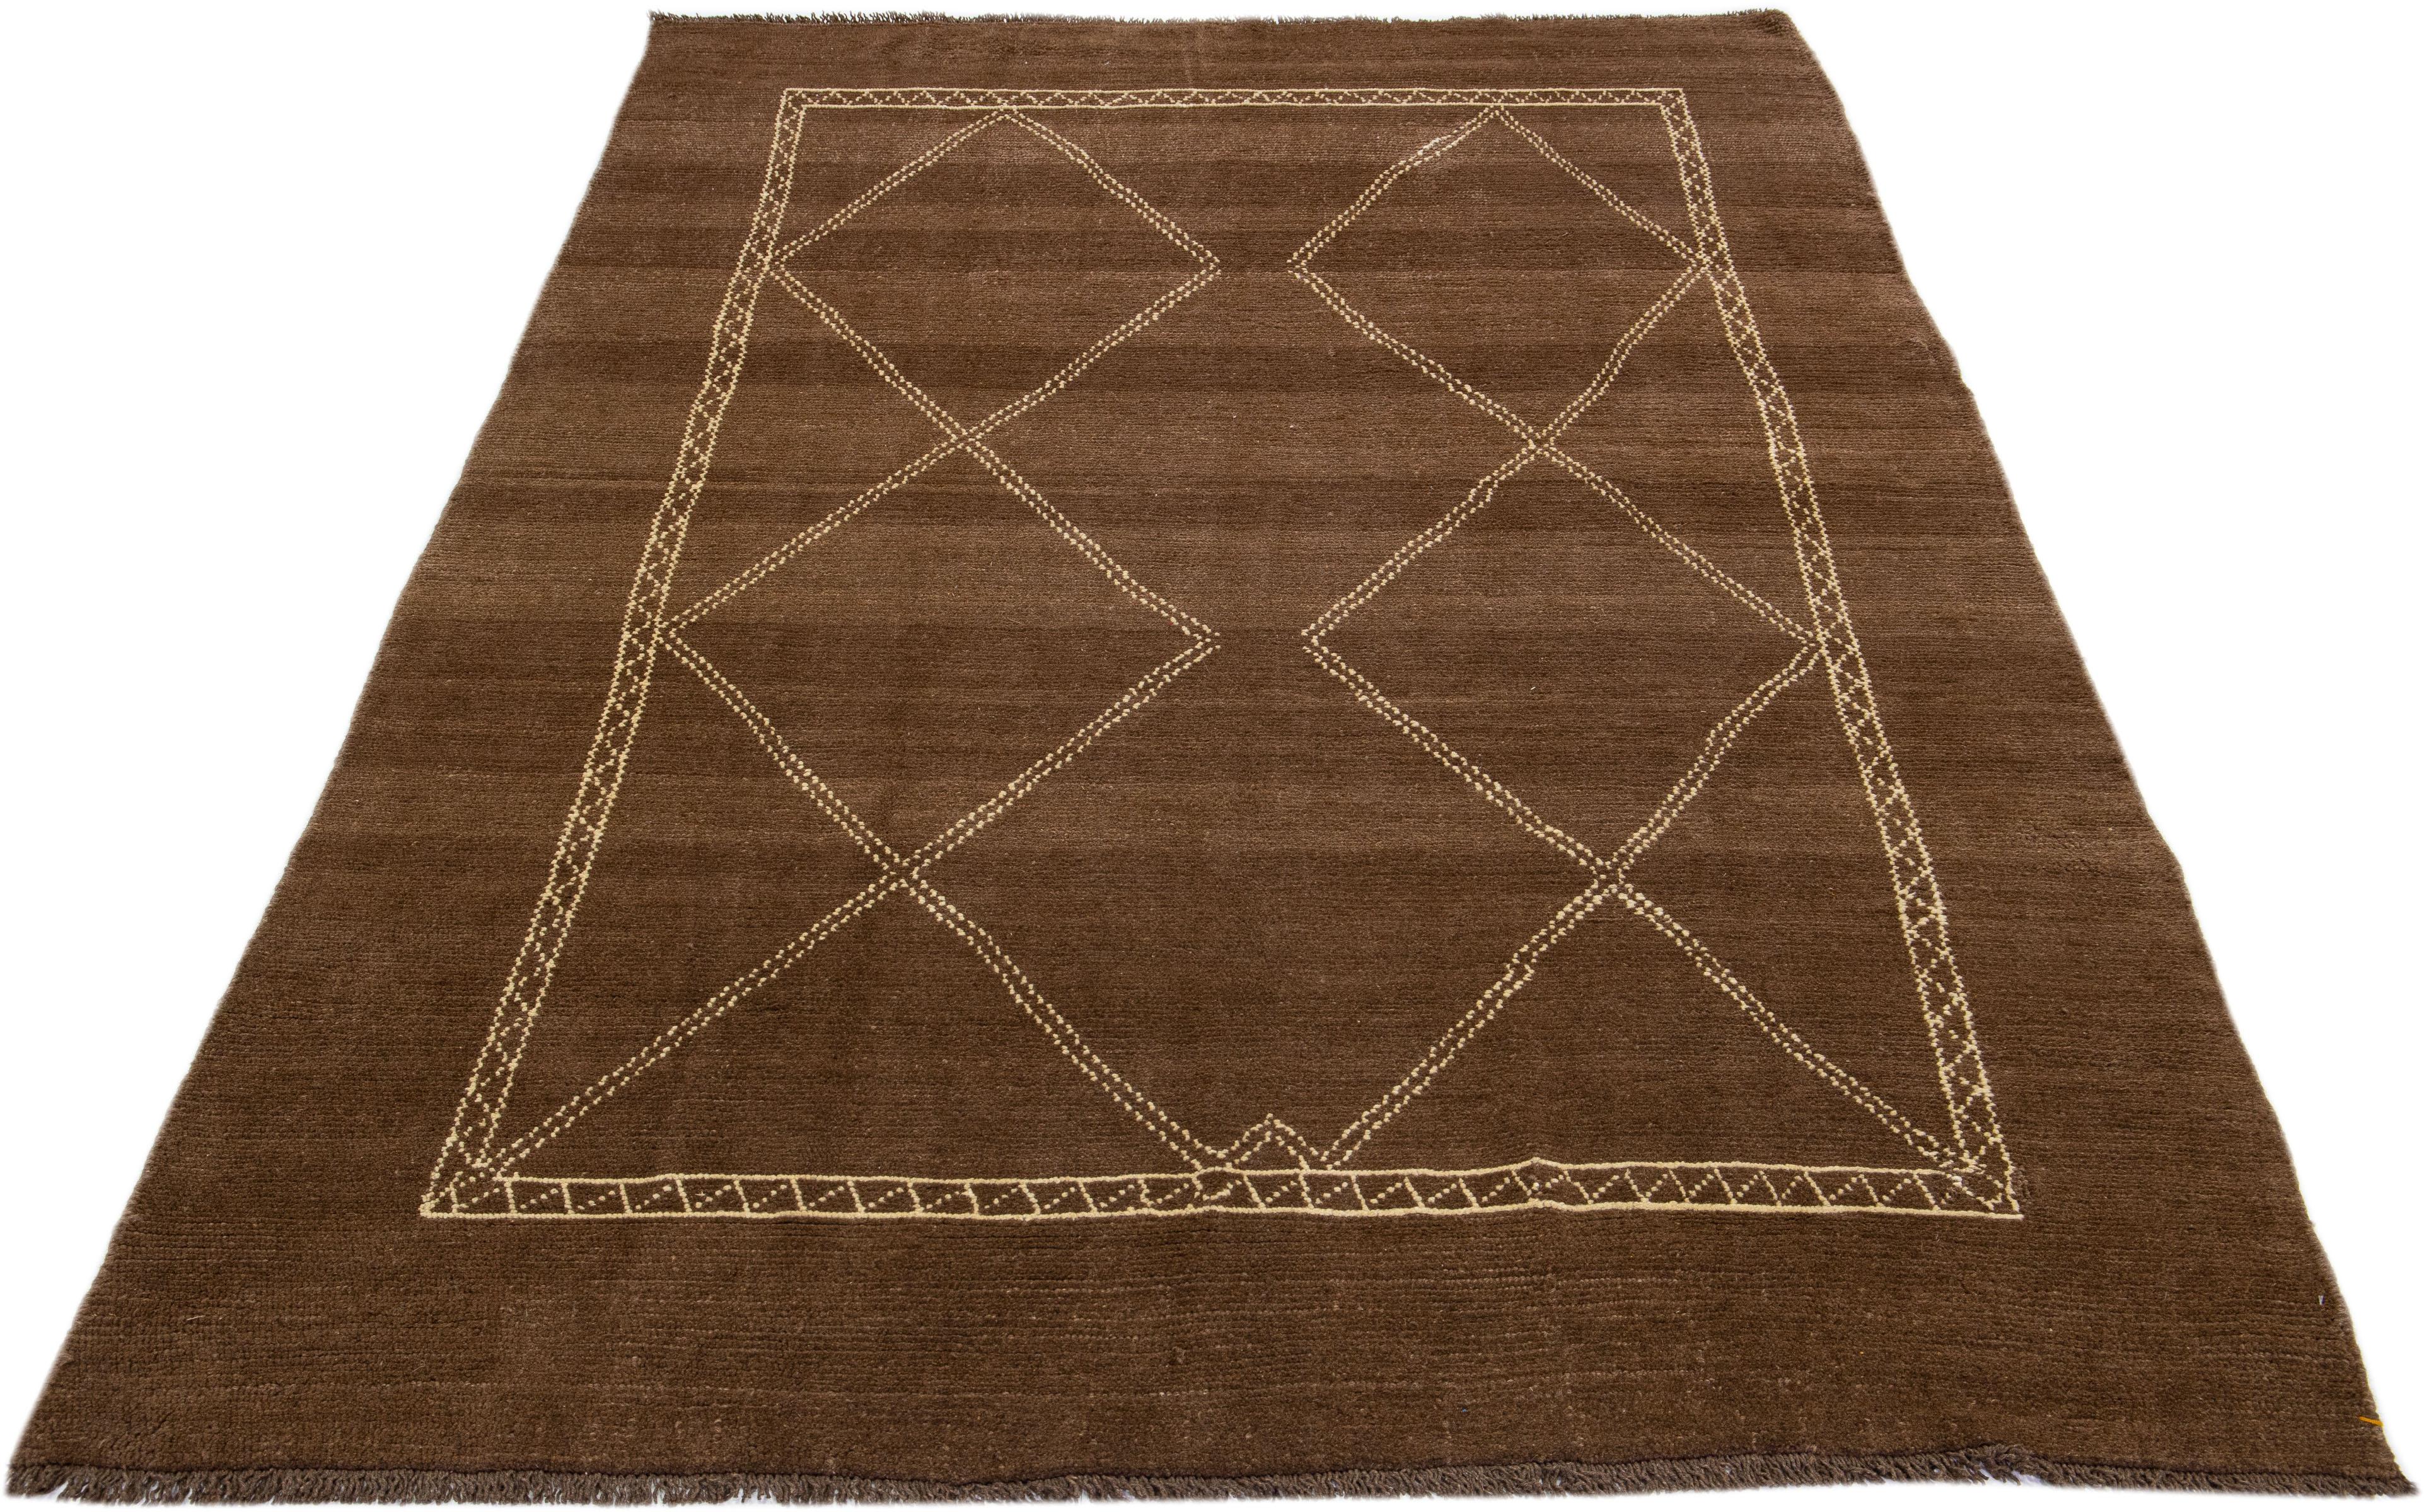 Afghan Modern Moroccan Style Brown Handmade Wool Rug with Geometric Pattern by Apadana For Sale